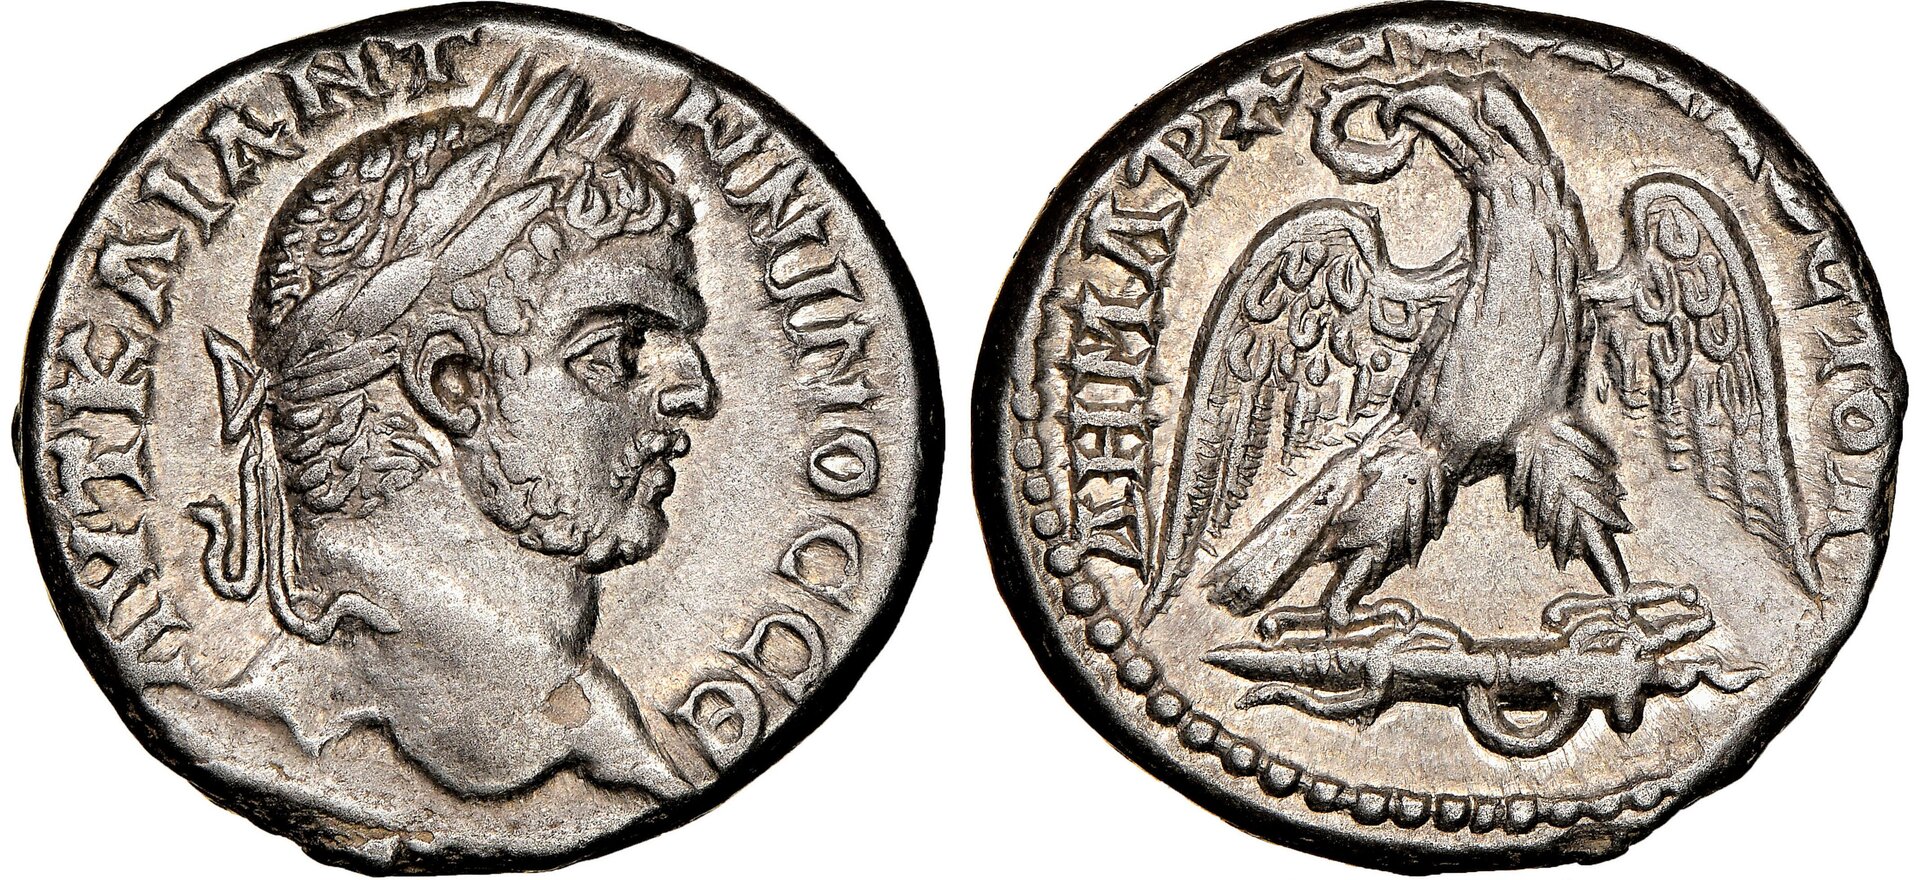 Caracalla-Judaea, Prieur 1660 & 1661.jpg